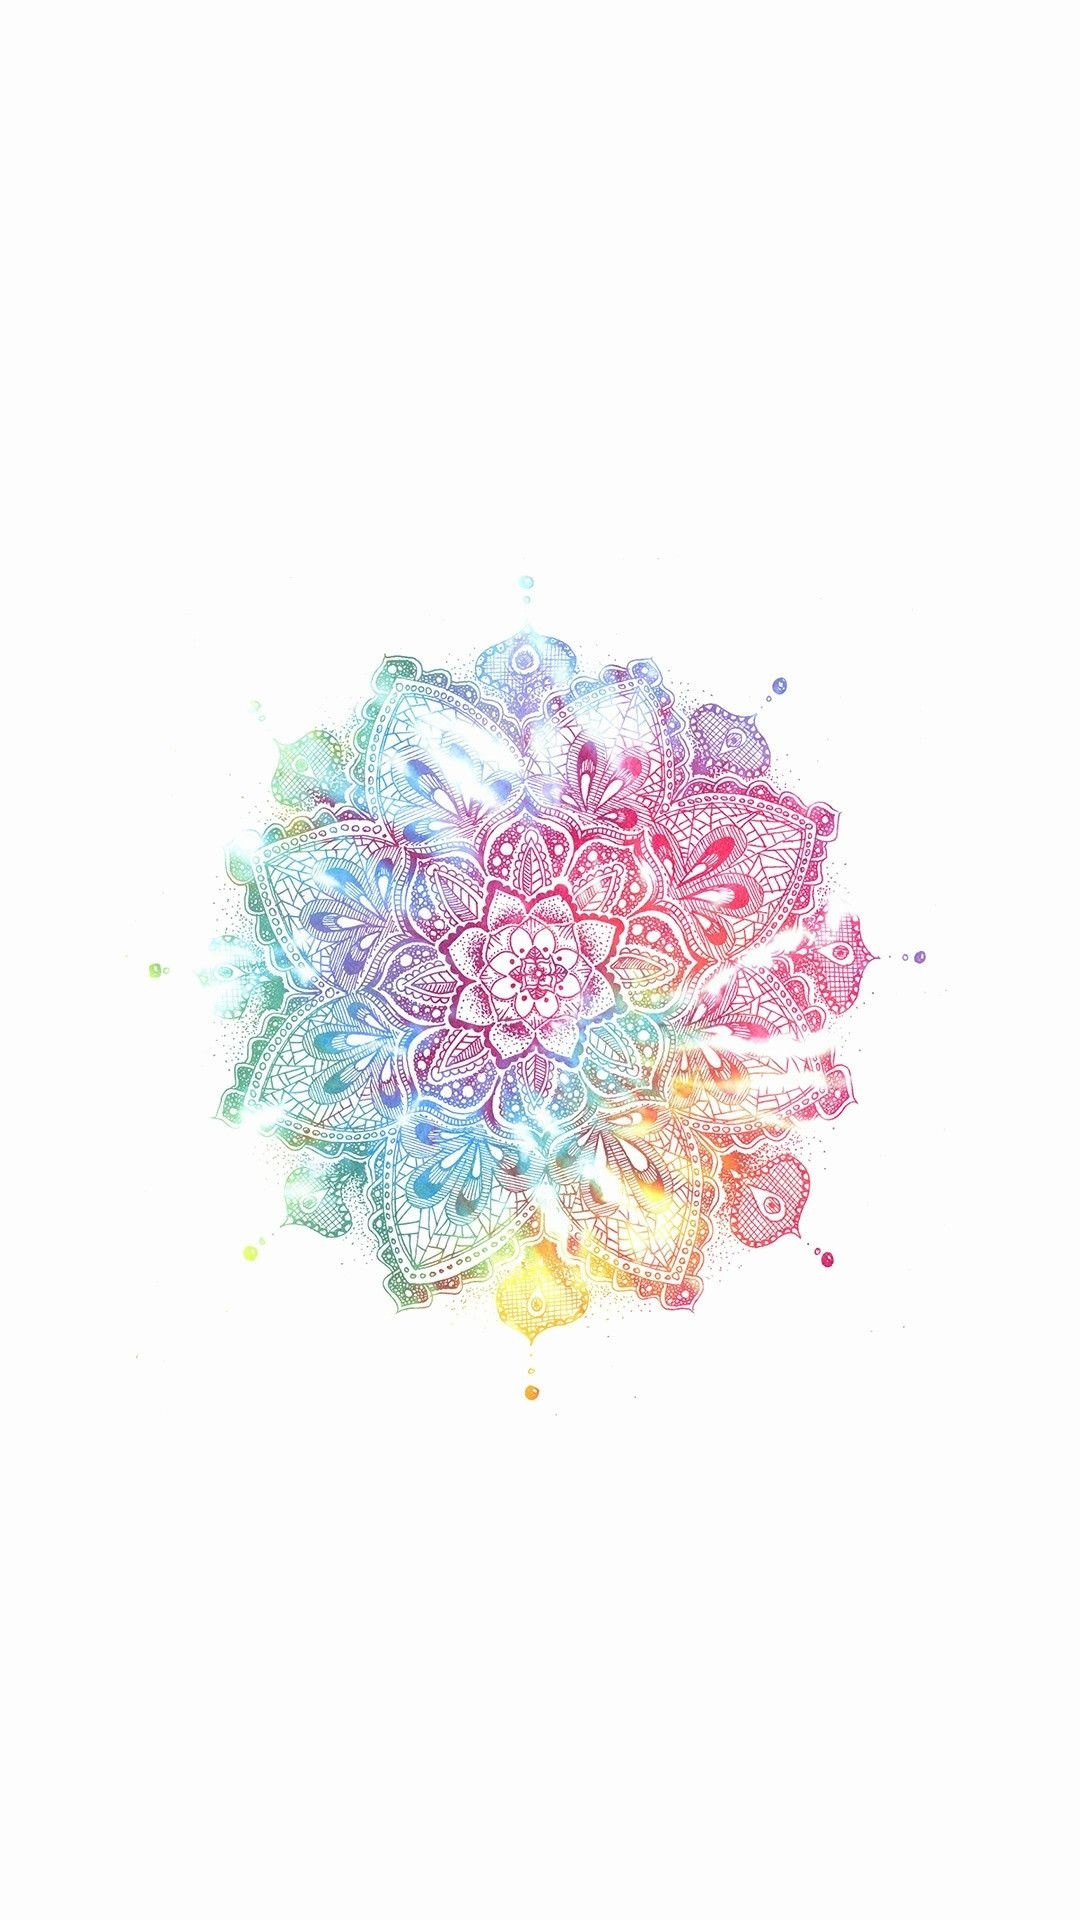 Flower mandala wallpapers, Whimsical floral designs, Vibrant colors, Botanical art, 1080x1920 Full HD Handy